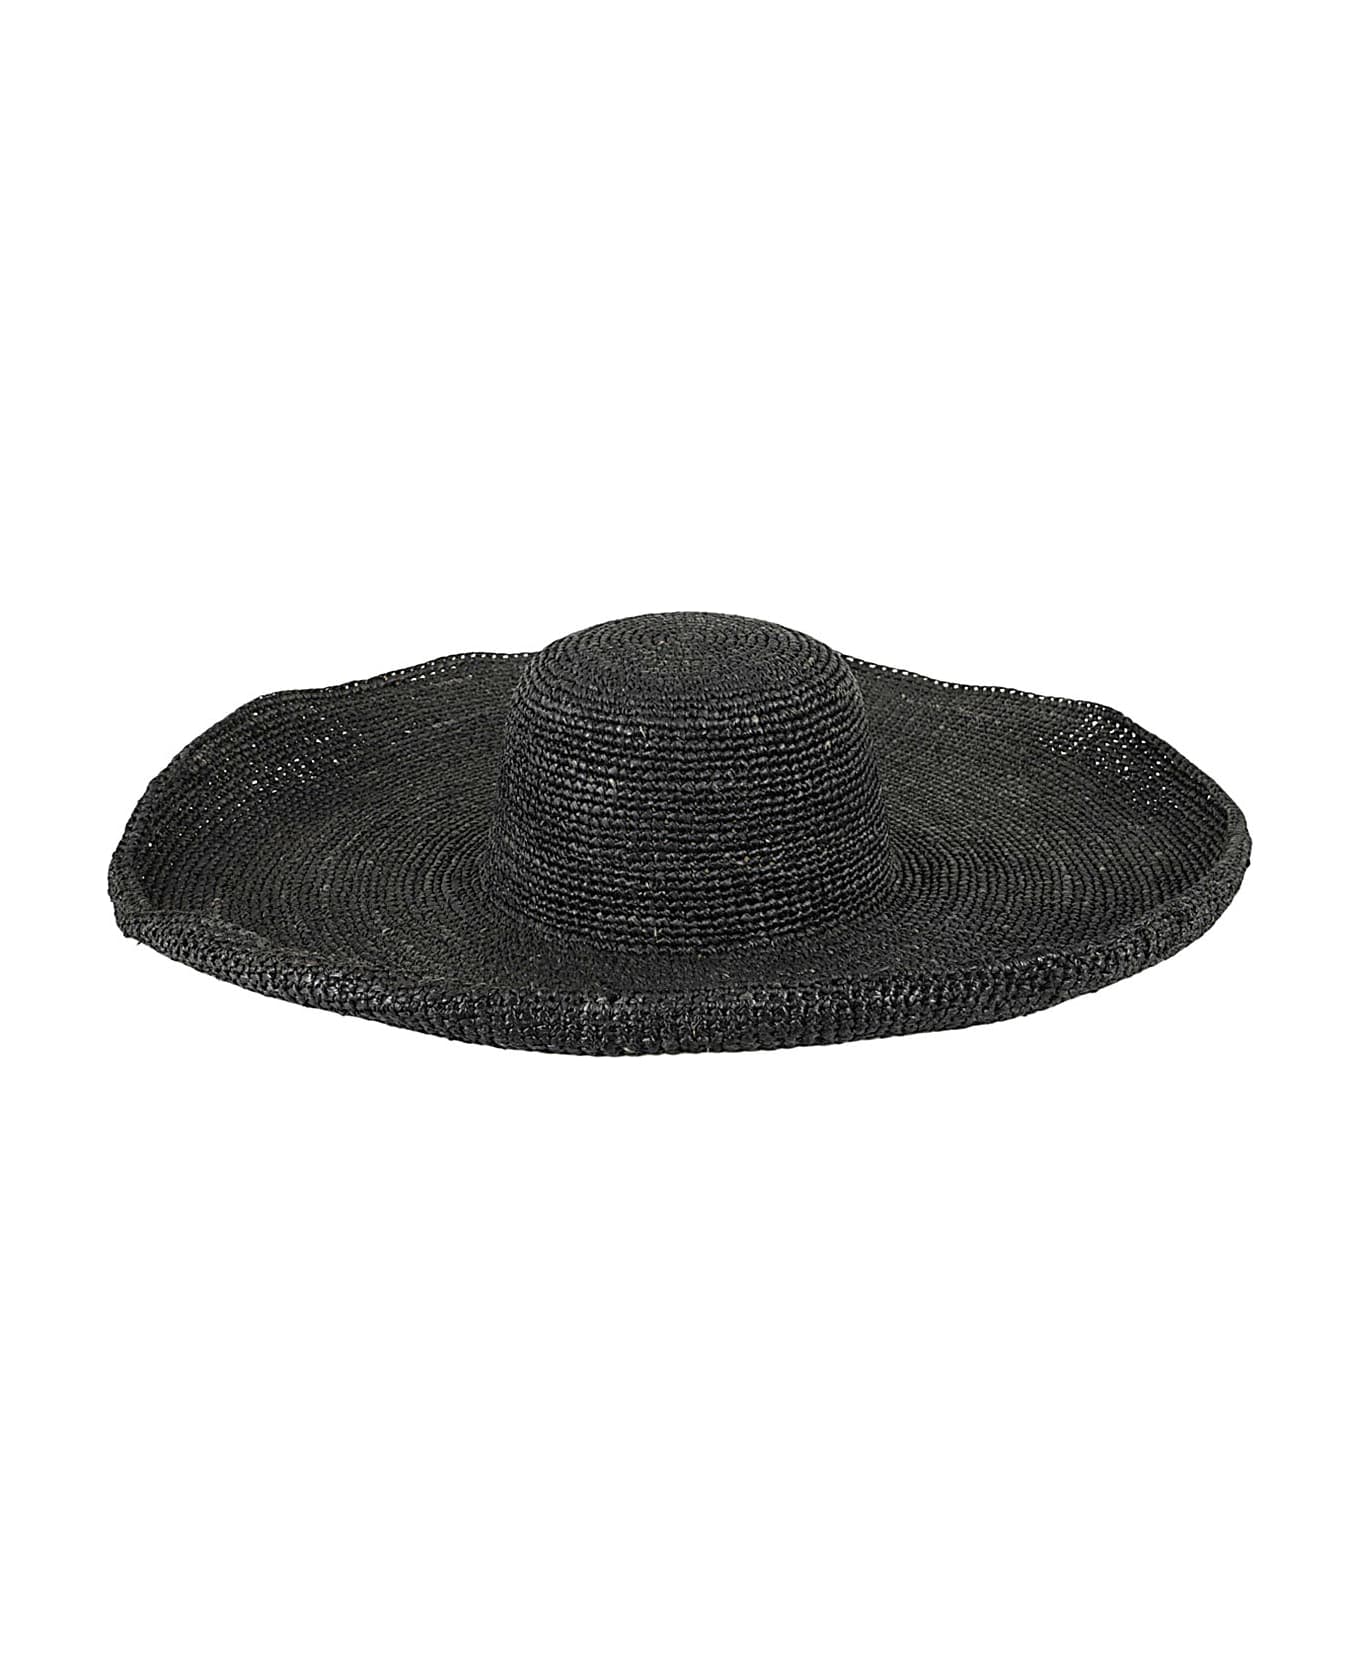 Ibeliv Hat - Black 帽子